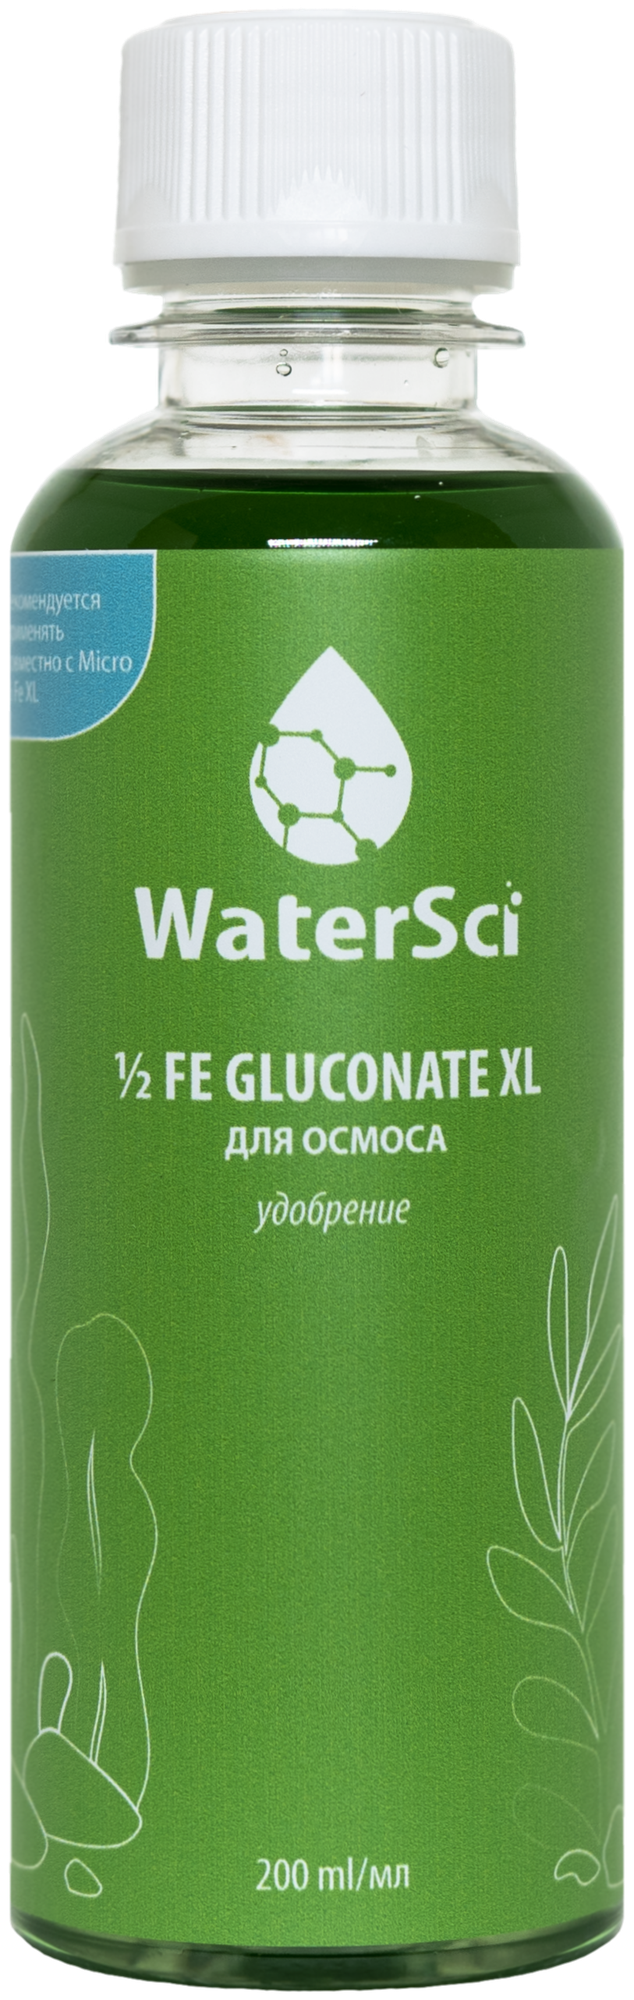 Удобрение с железом Water Sci. 1/2 Fe gluconate XL, 200 мл.